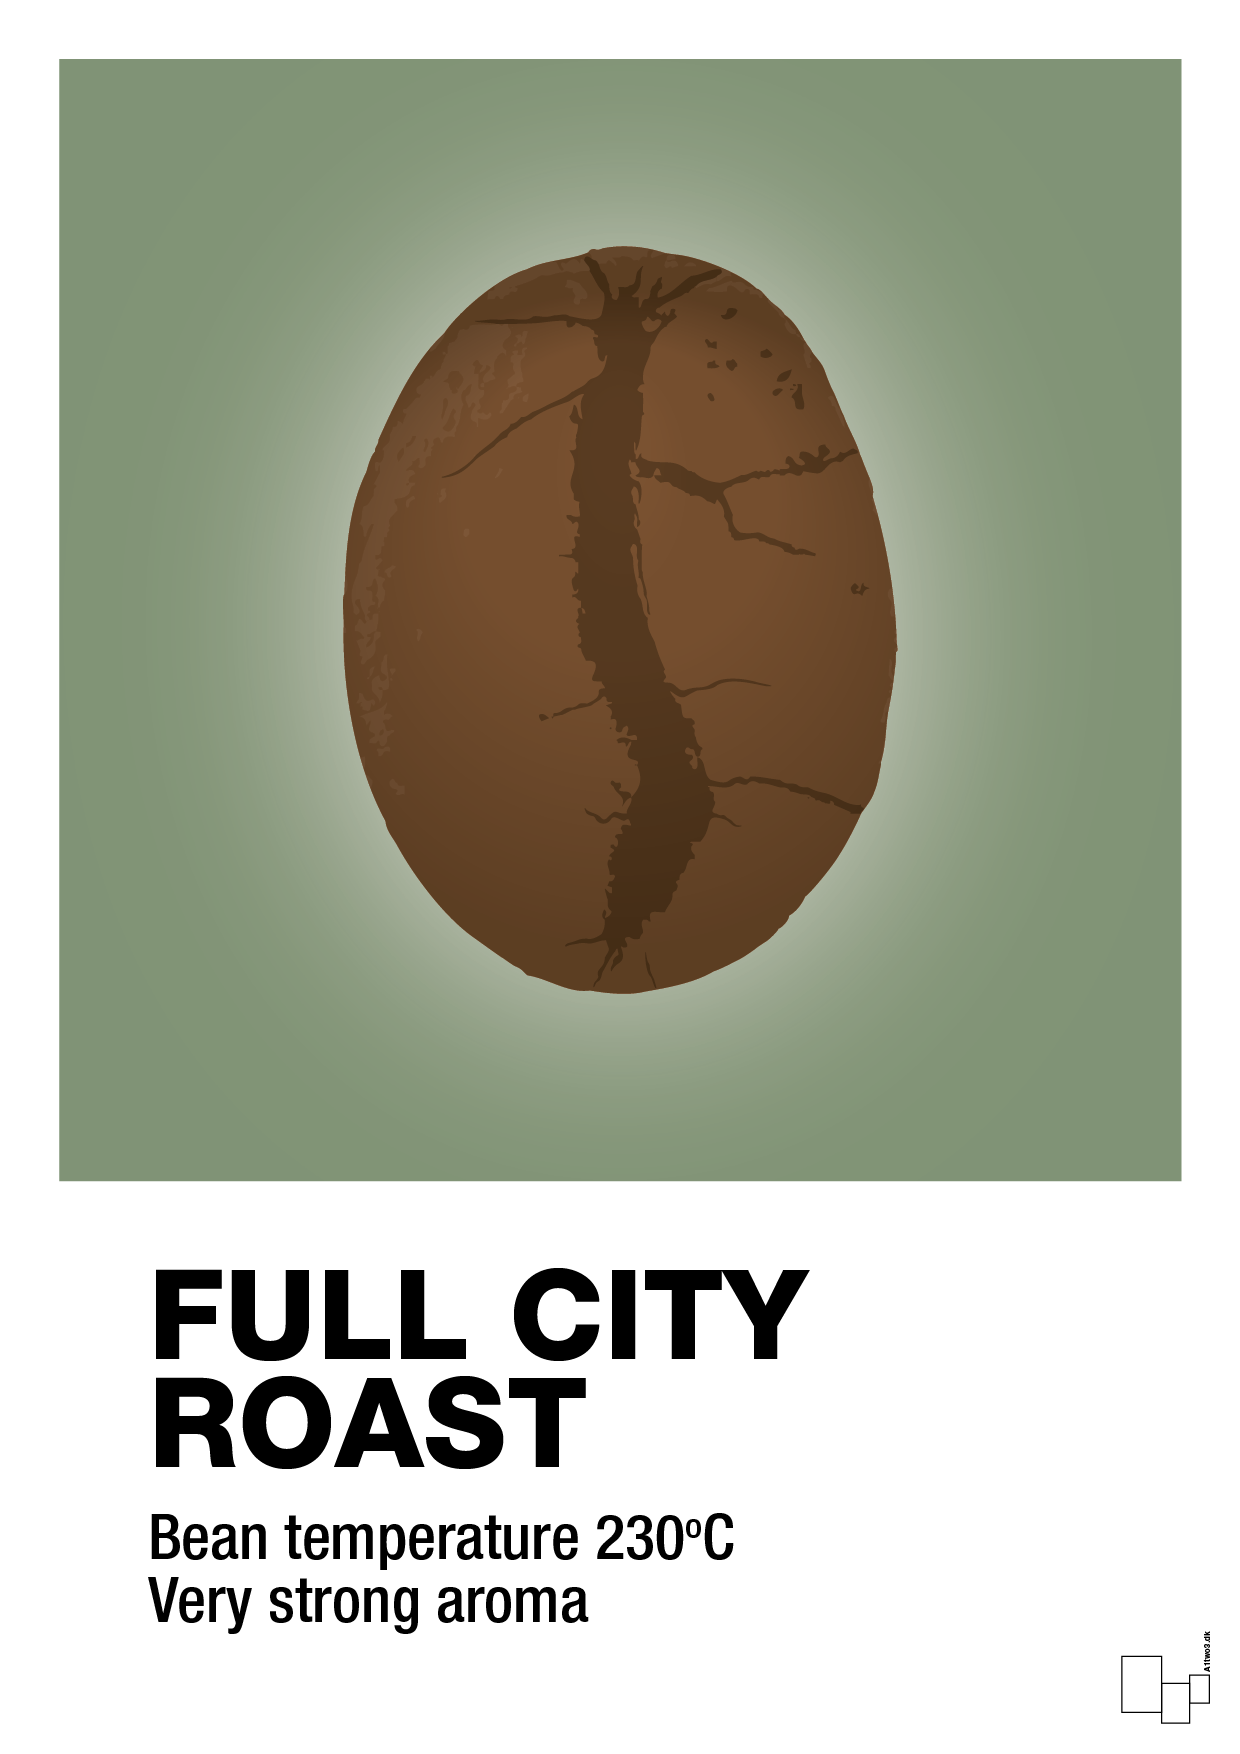 full city roast - Plakat med Mad & Drikke i Jade